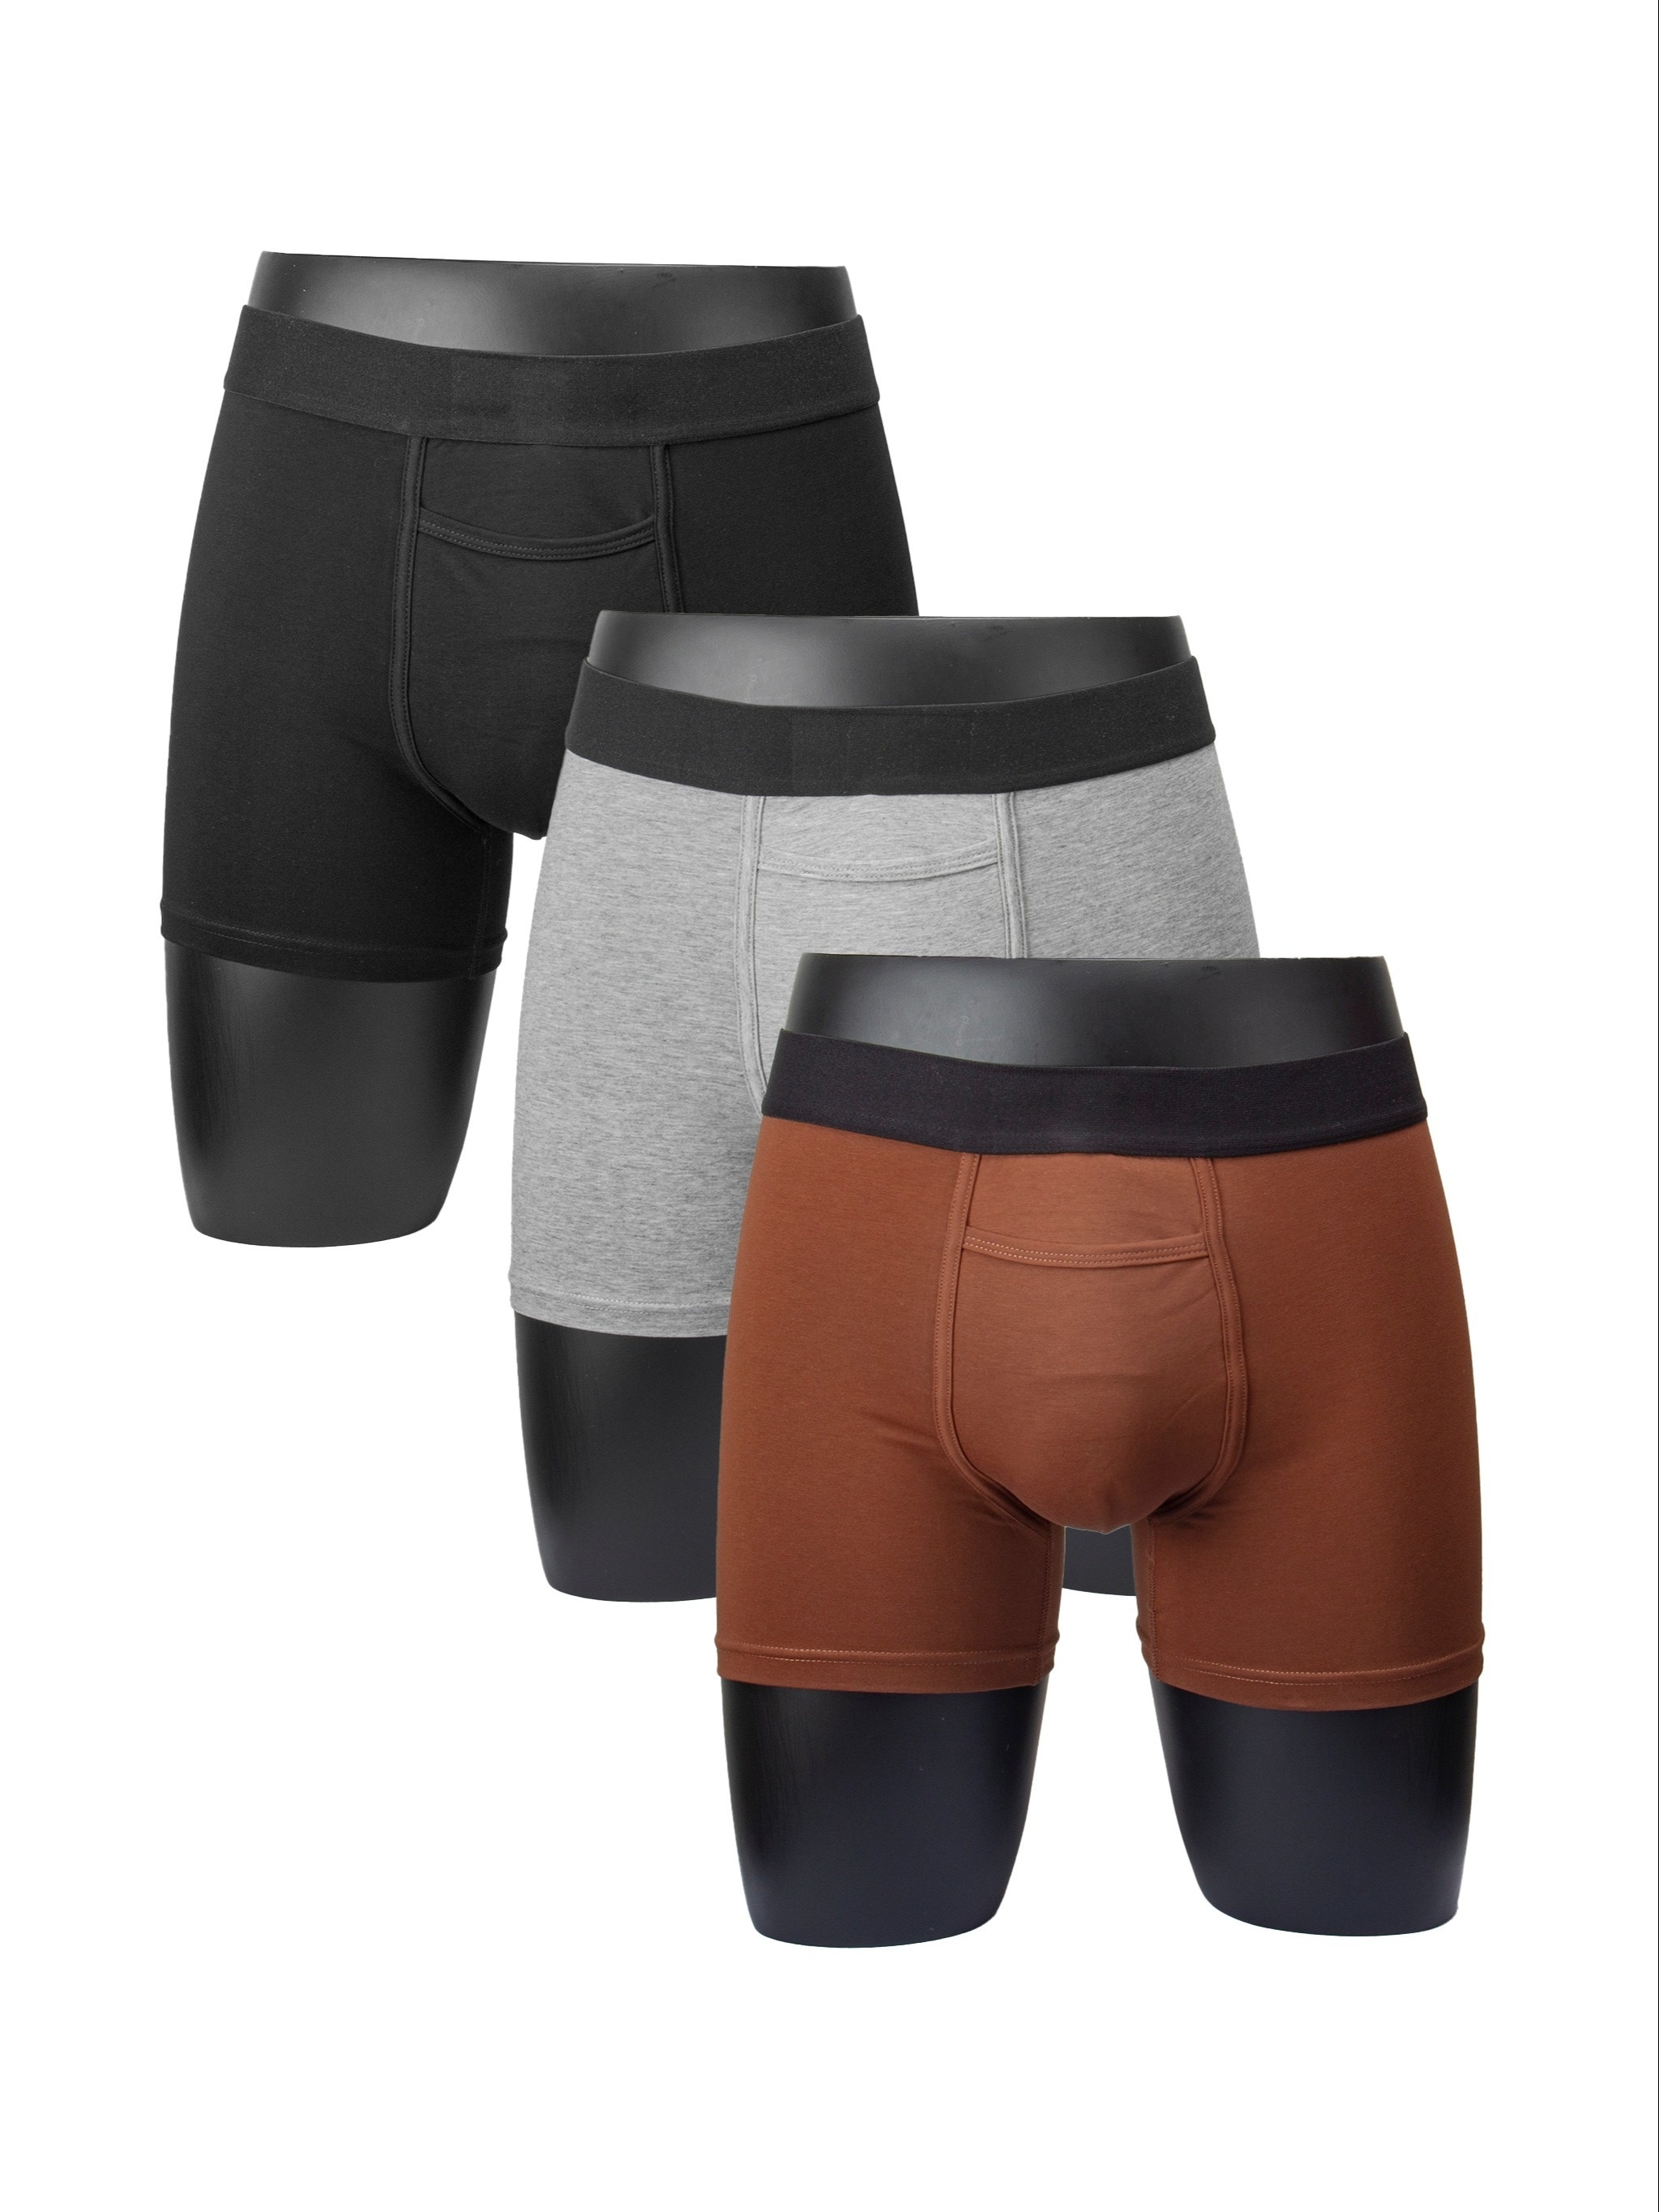 Men Underwear Briefs Panties Underpants Boxers Shorts Open Front Solid  Stretchy